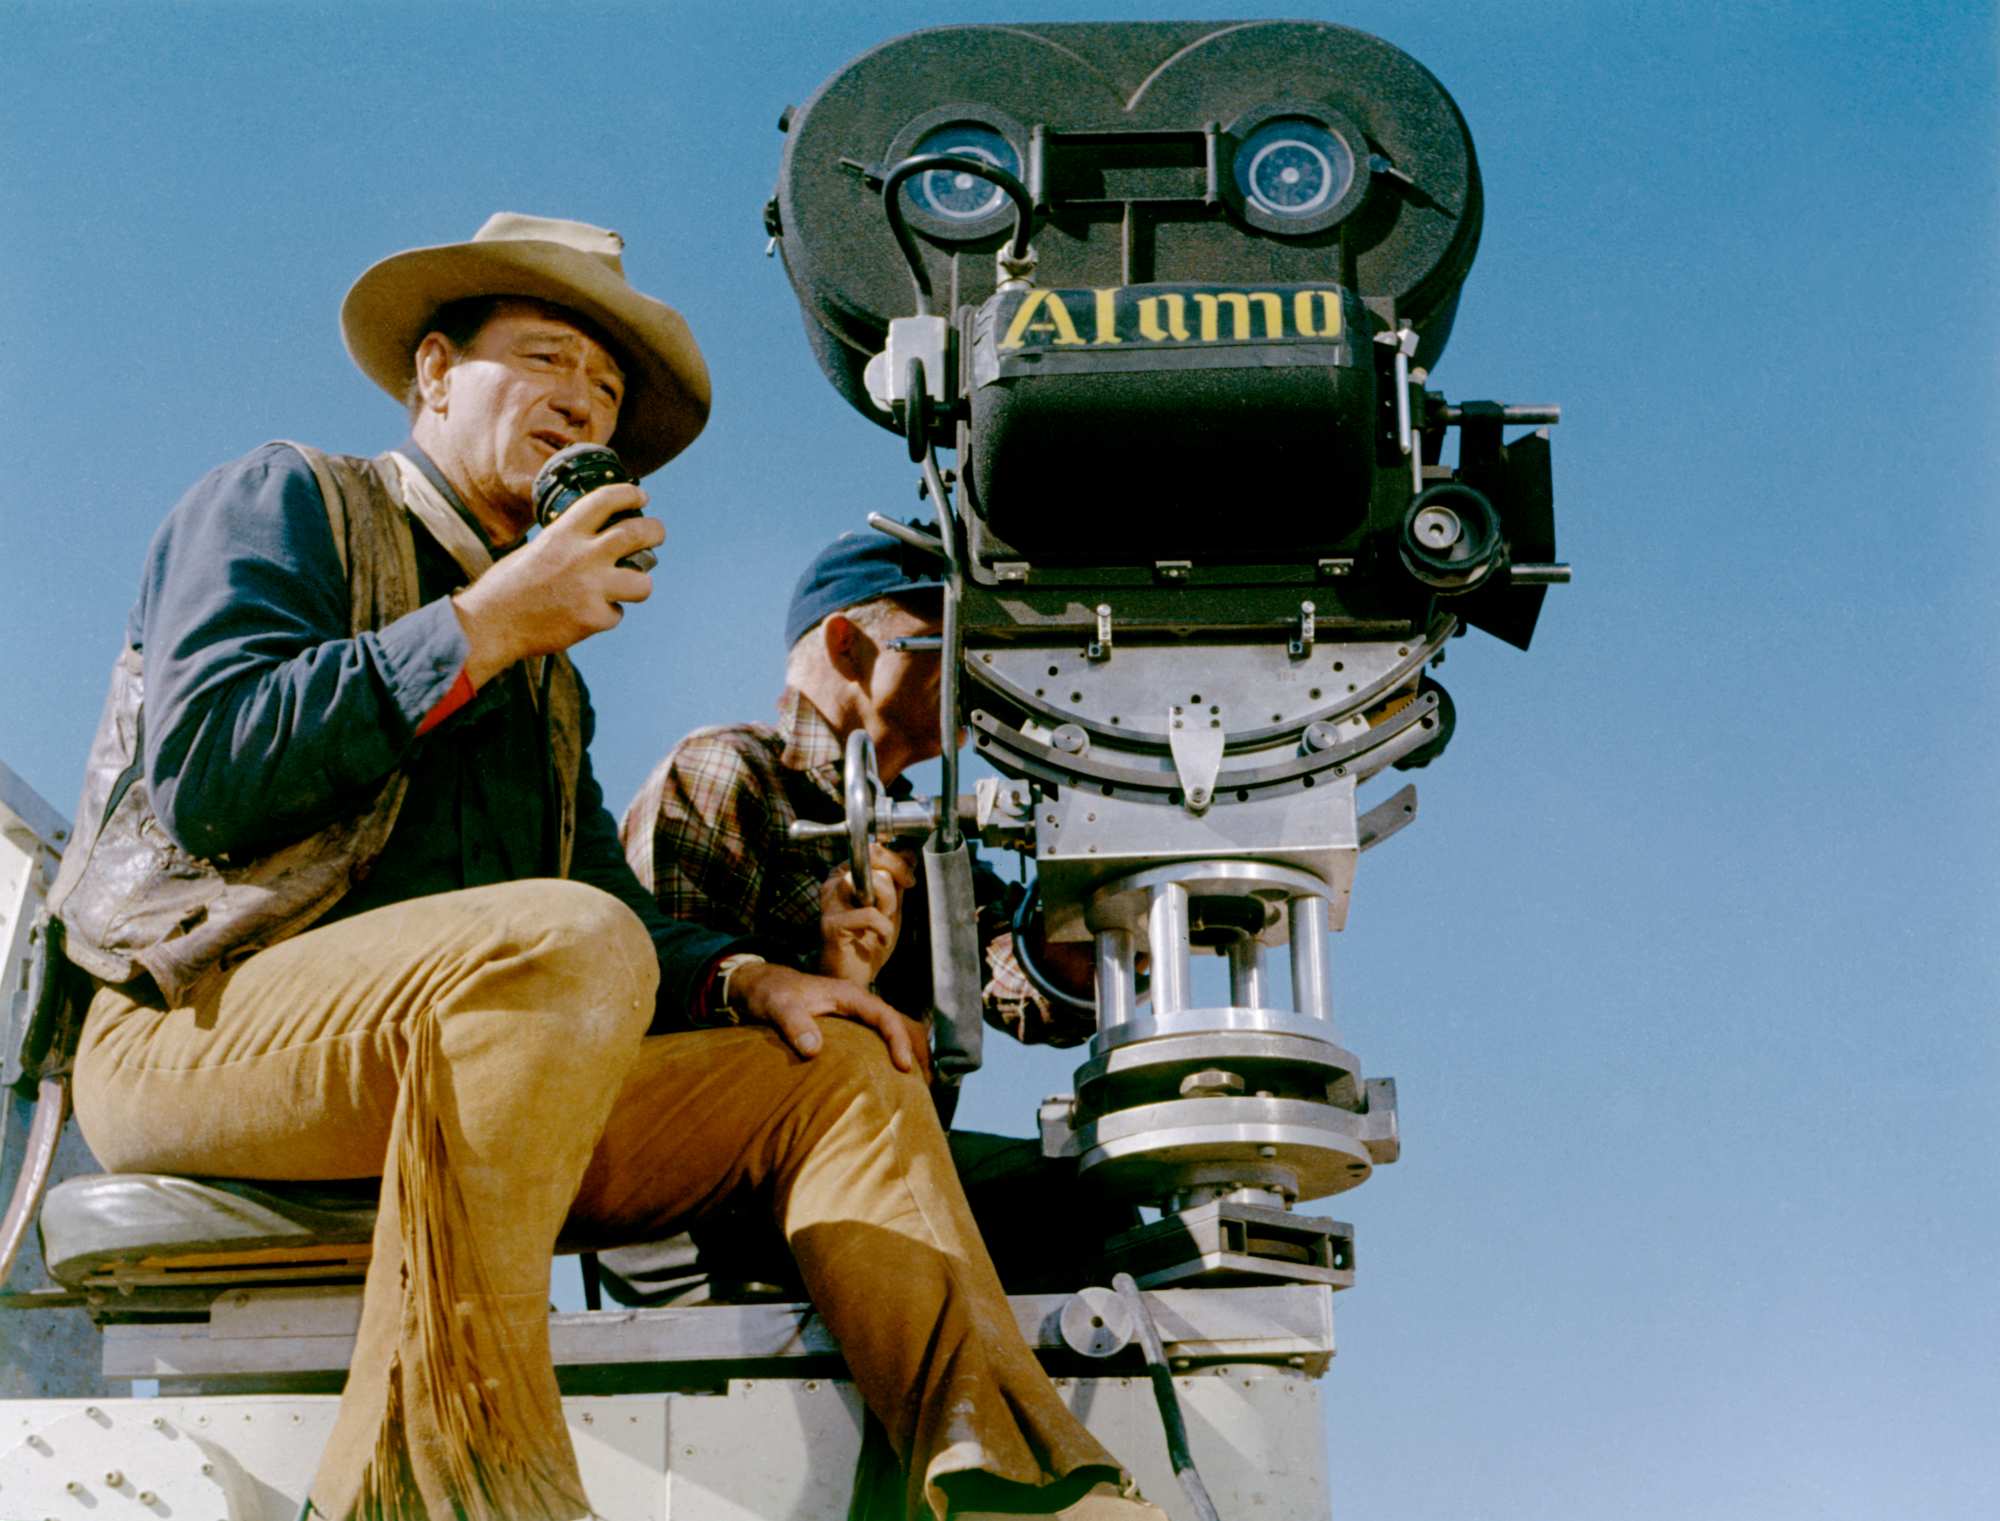 'The Alamo' director John Wayne sitting behind a movie camera wearing a Western movie costume